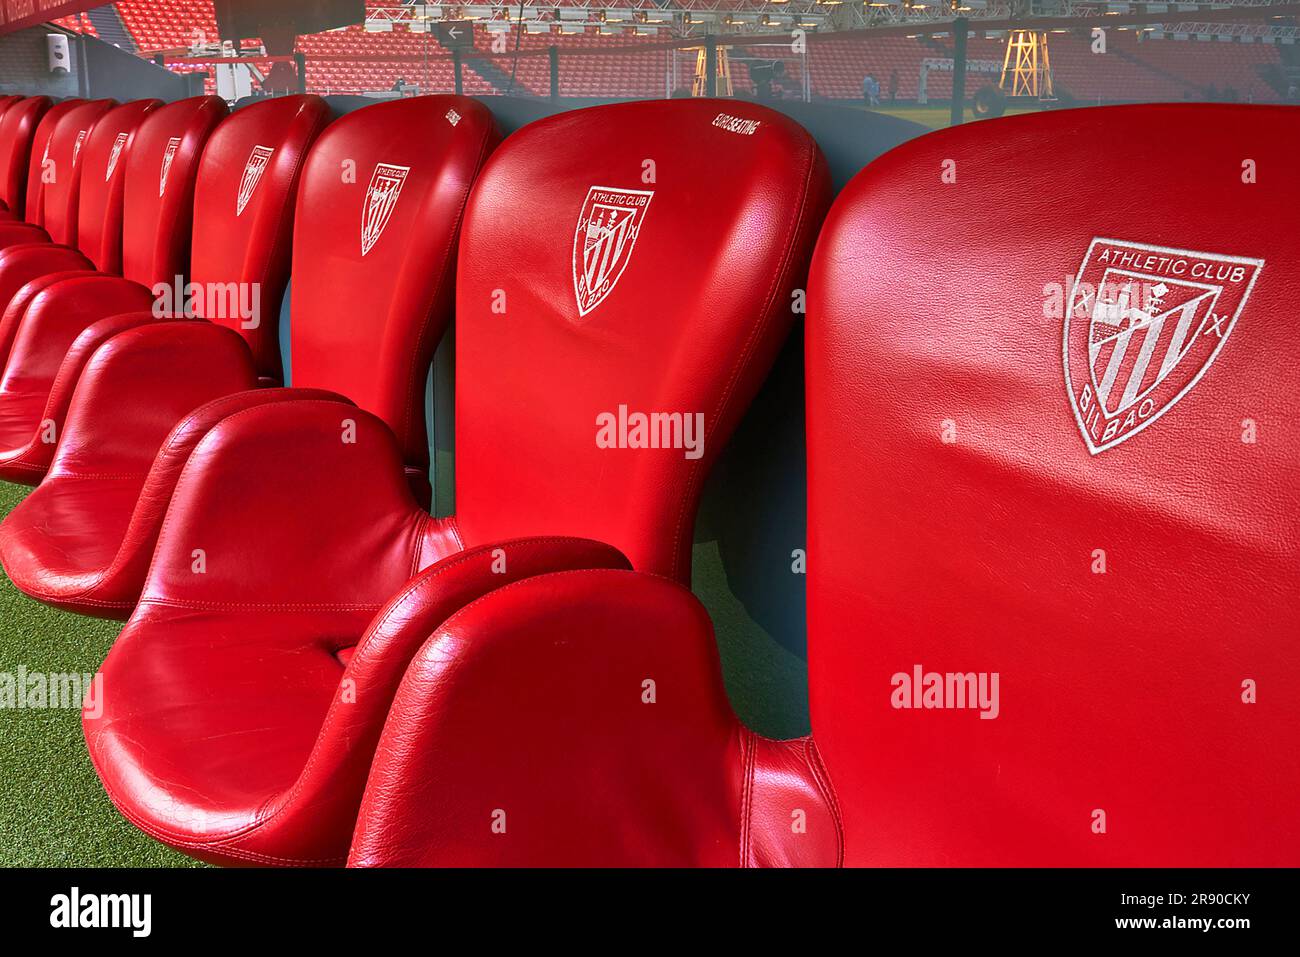 Stadium seat cushion hi-res stock photography and images - Alamy